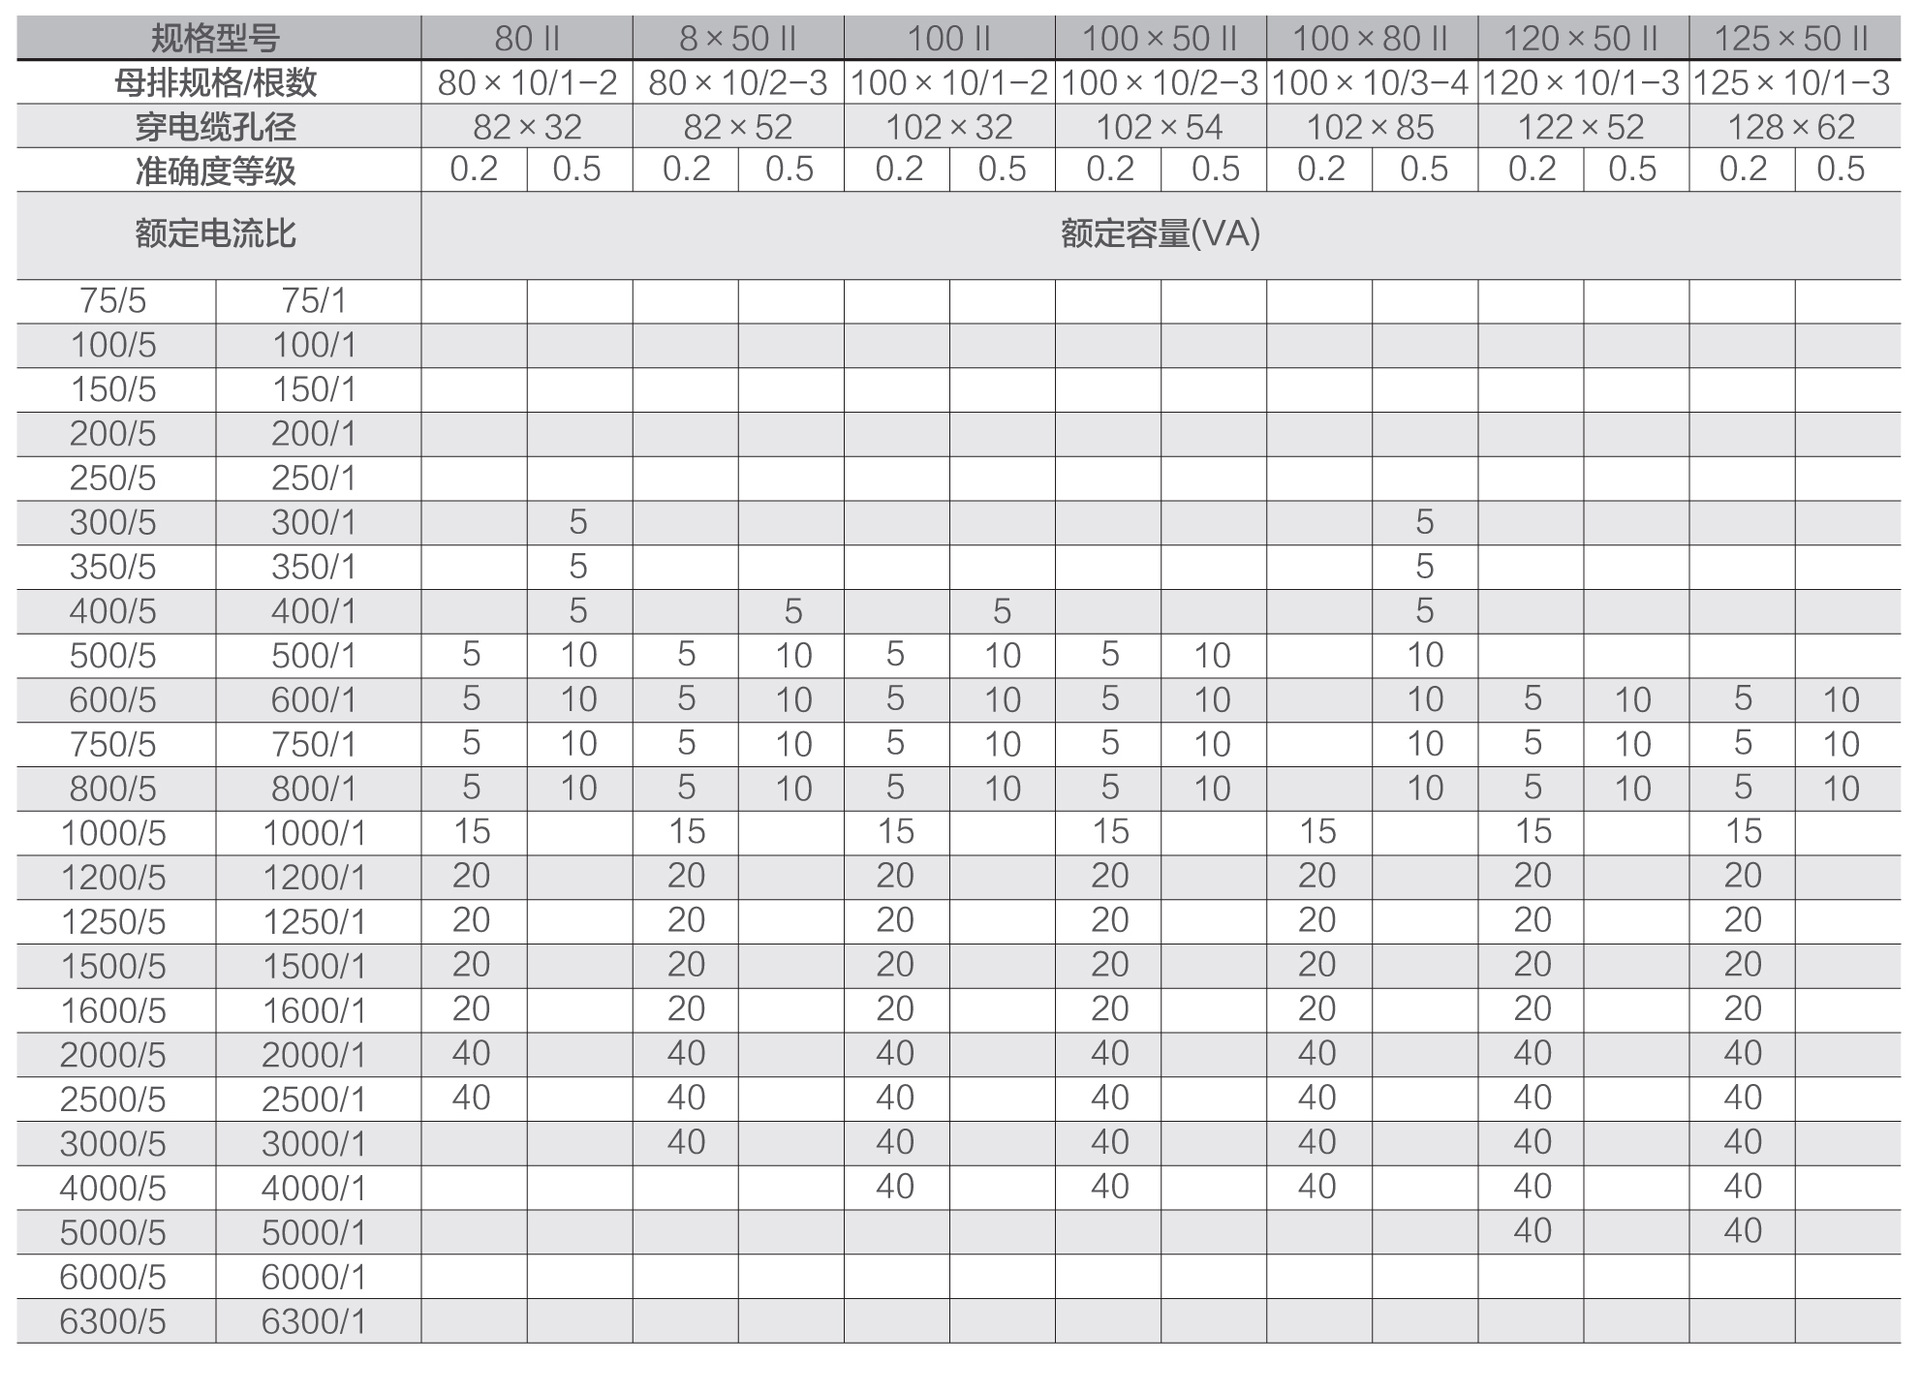 SHI-066-30I精度等级05级电流互感器江苏斯菲尔厂家直销 电流互感器,江苏斯菲尔厂家直销,SHI-066